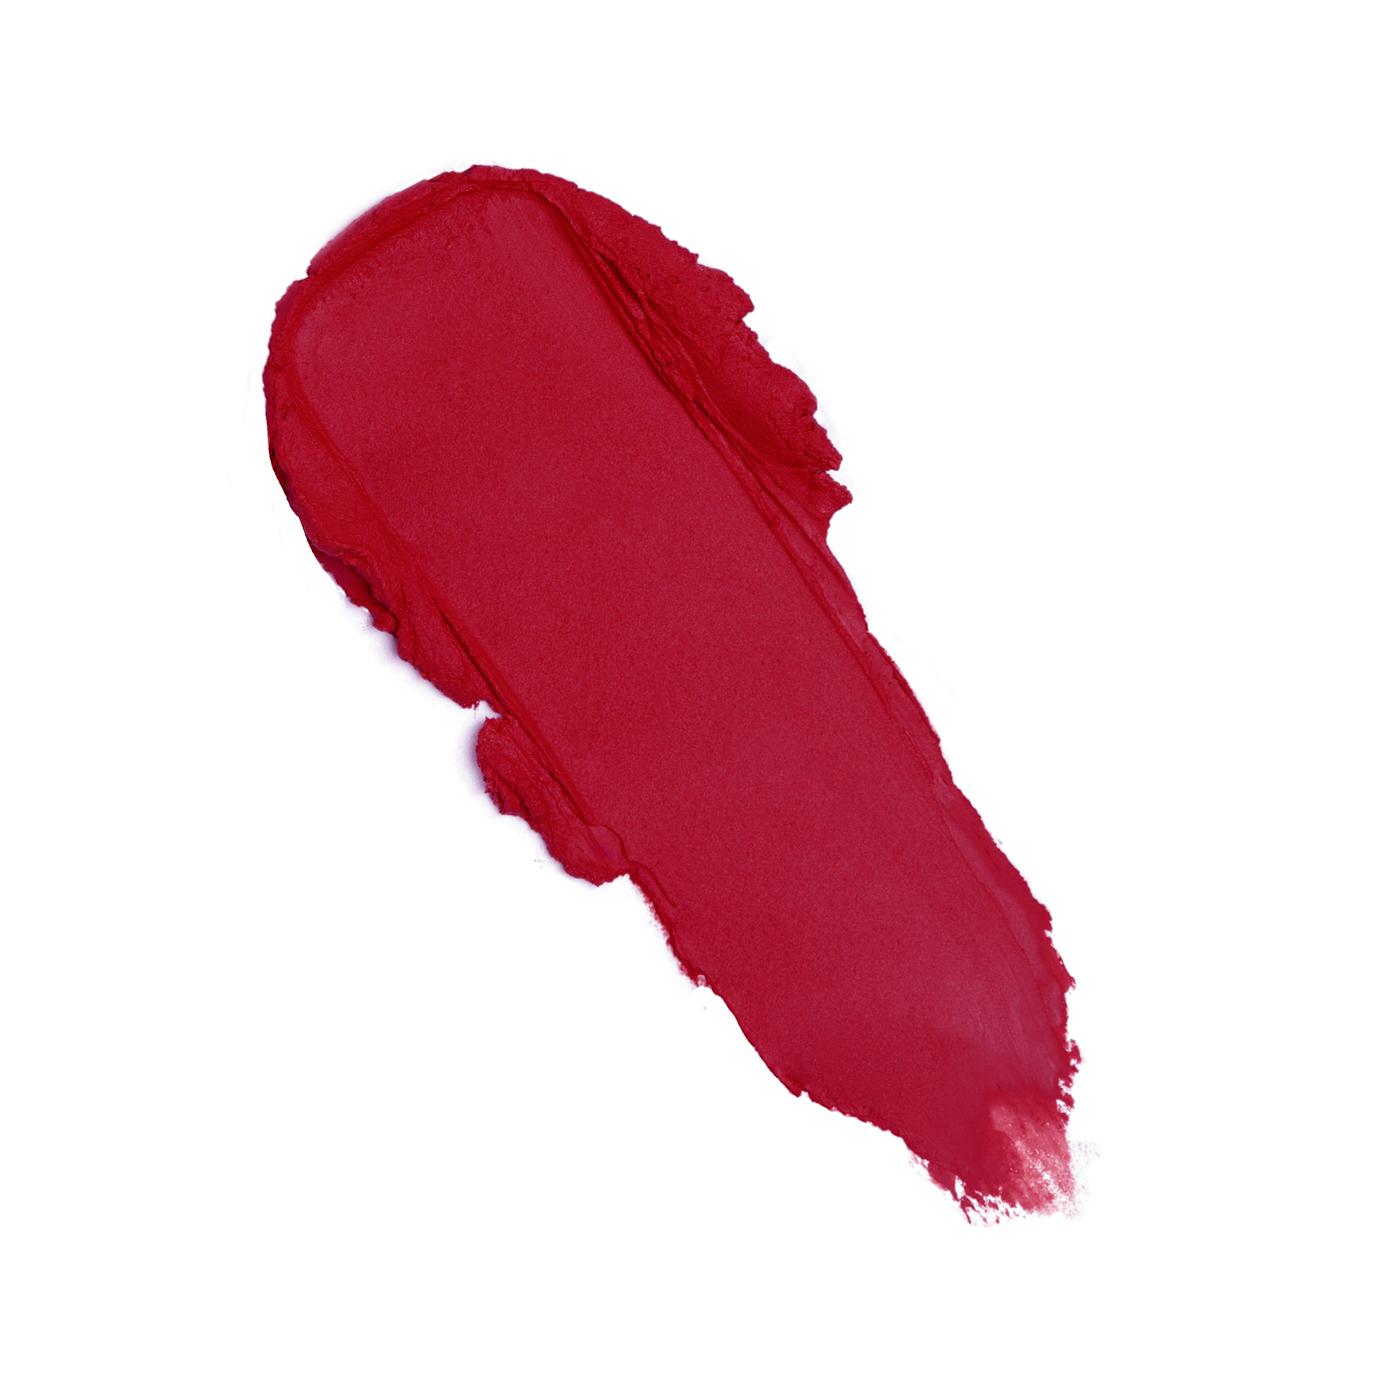 Makeup Revolution Lip Allure Soft Satin Lipstick - Material Girl Wine; image 2 of 3